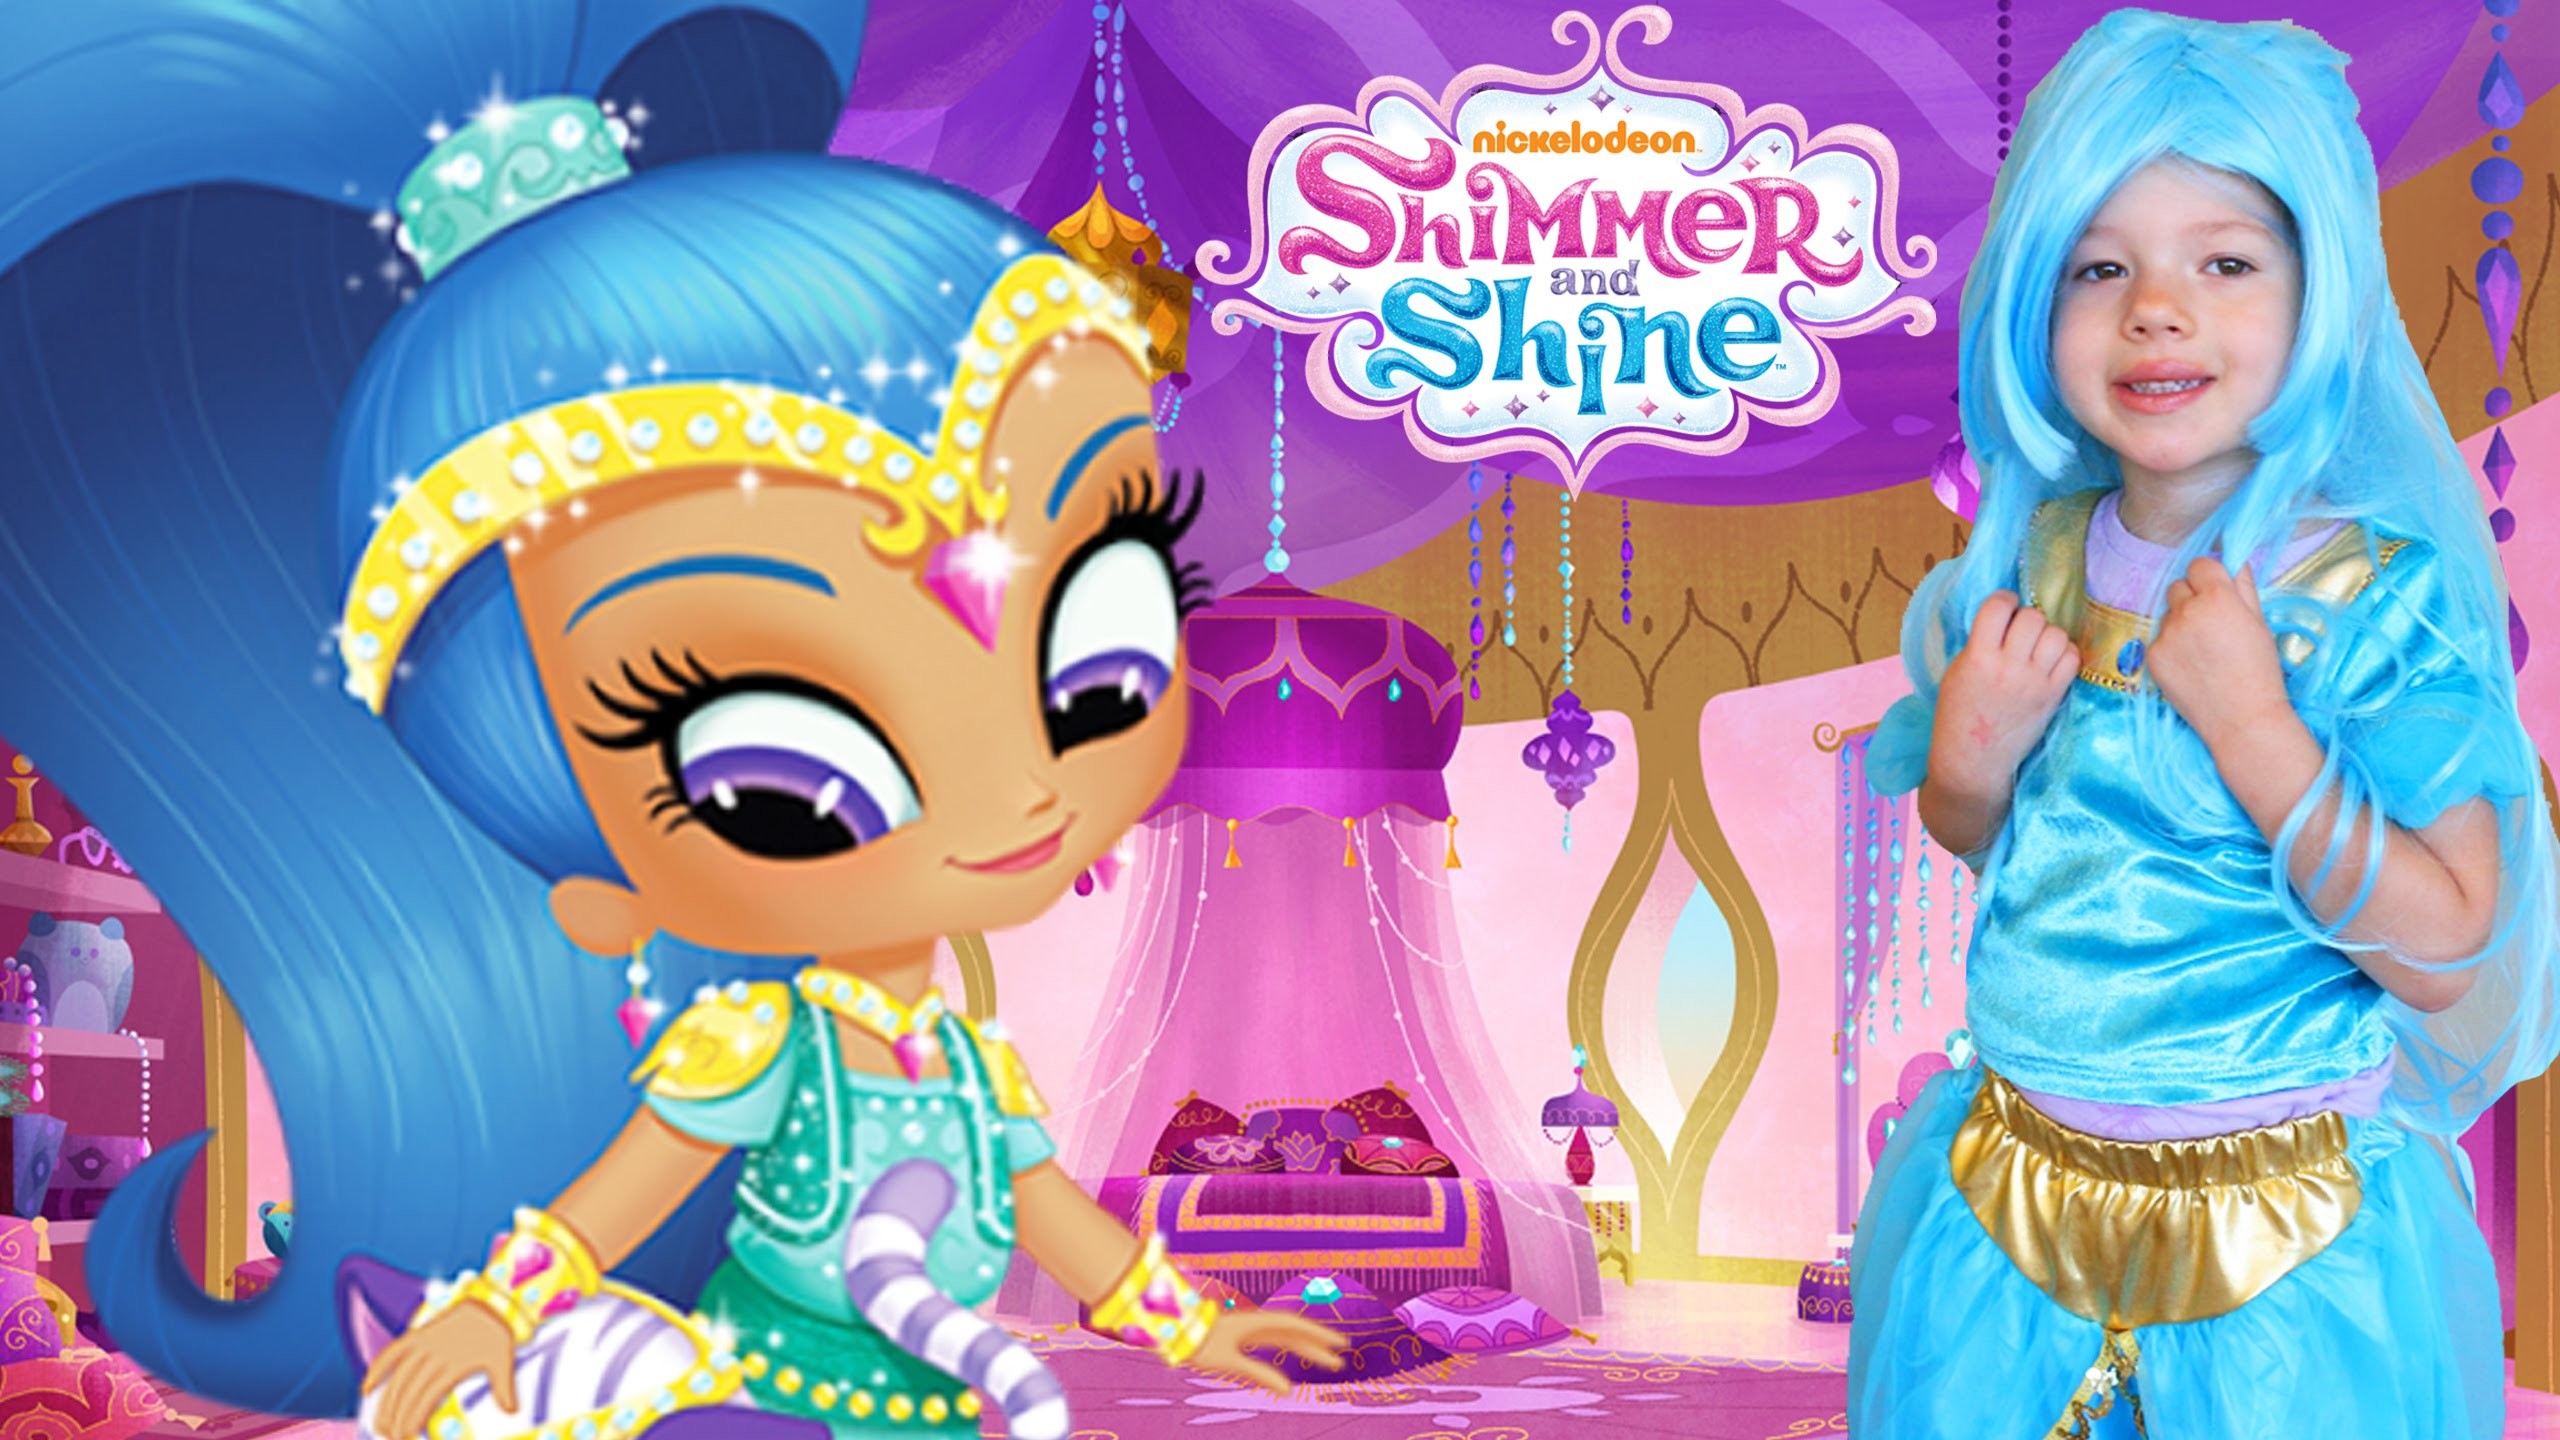 Shimmer and shine.jasmine princess.shimmer shine costume etsy. 